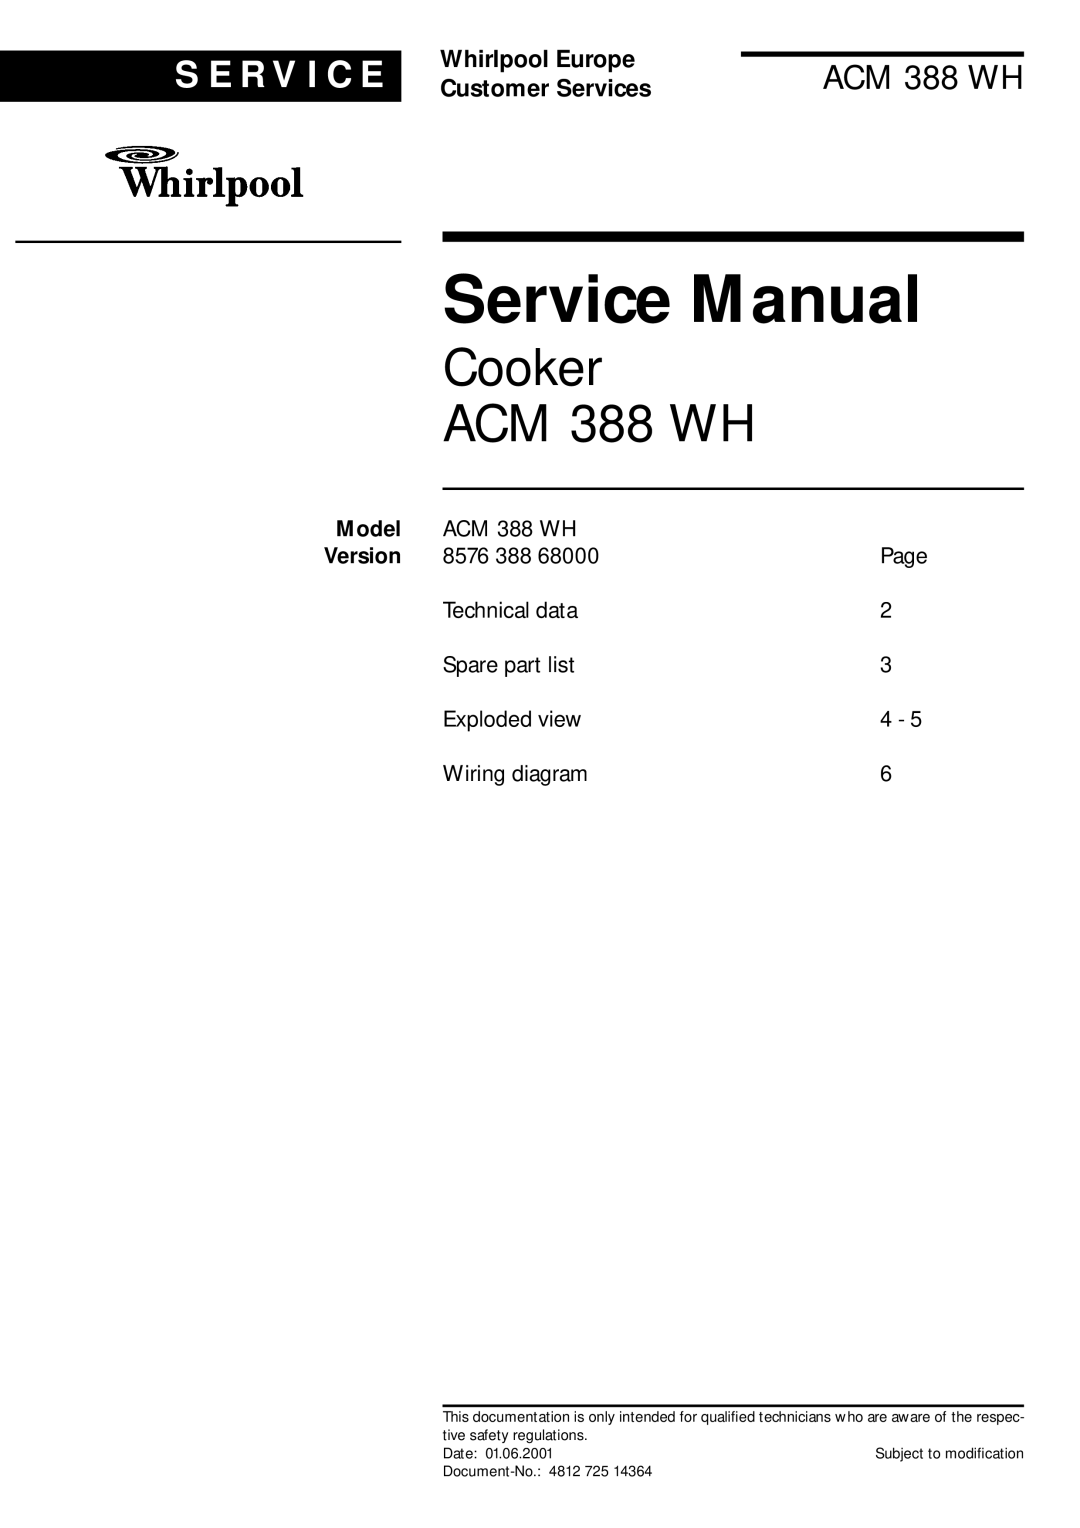 Whirlpool service manual Model, Cooker hood AKR 633 WH, S E R V I C E, Whirlpool Europe, Customer Services 